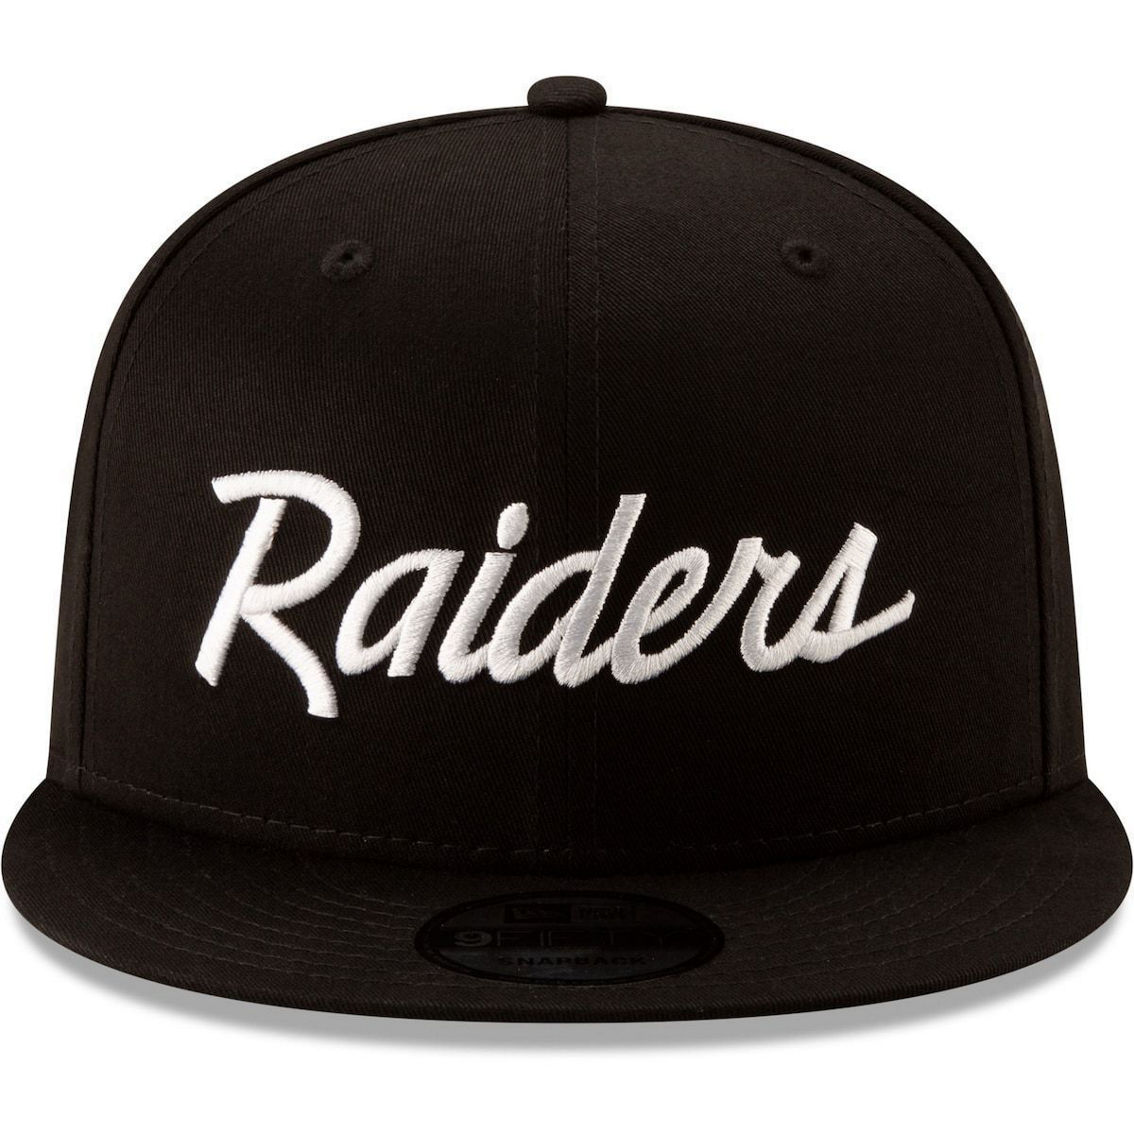 New Era Men's Black Las Vegas Raiders Throwback 9FIFTY Adjustable Snapback Hat - Image 3 of 4